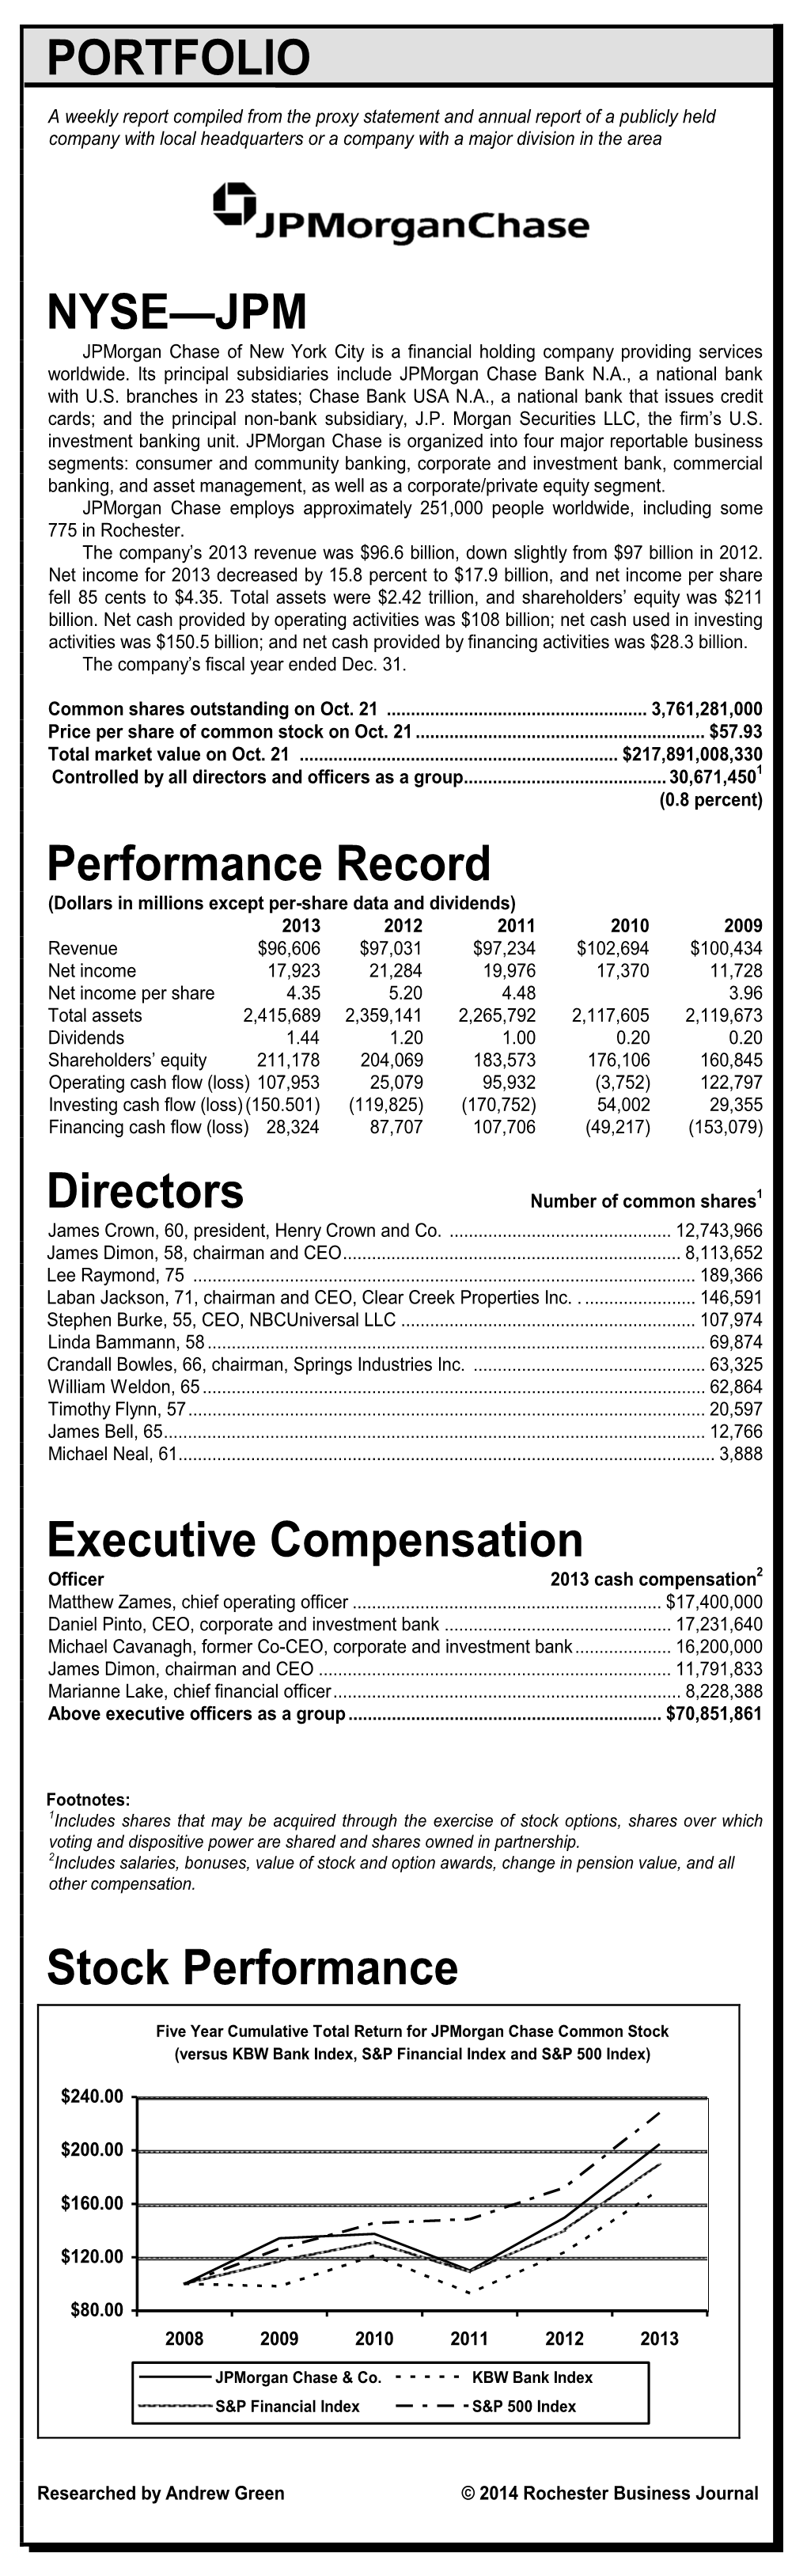 PORTFOLIO NYSE—JPM Performance Record Directors Executive Compensation Stock Performance